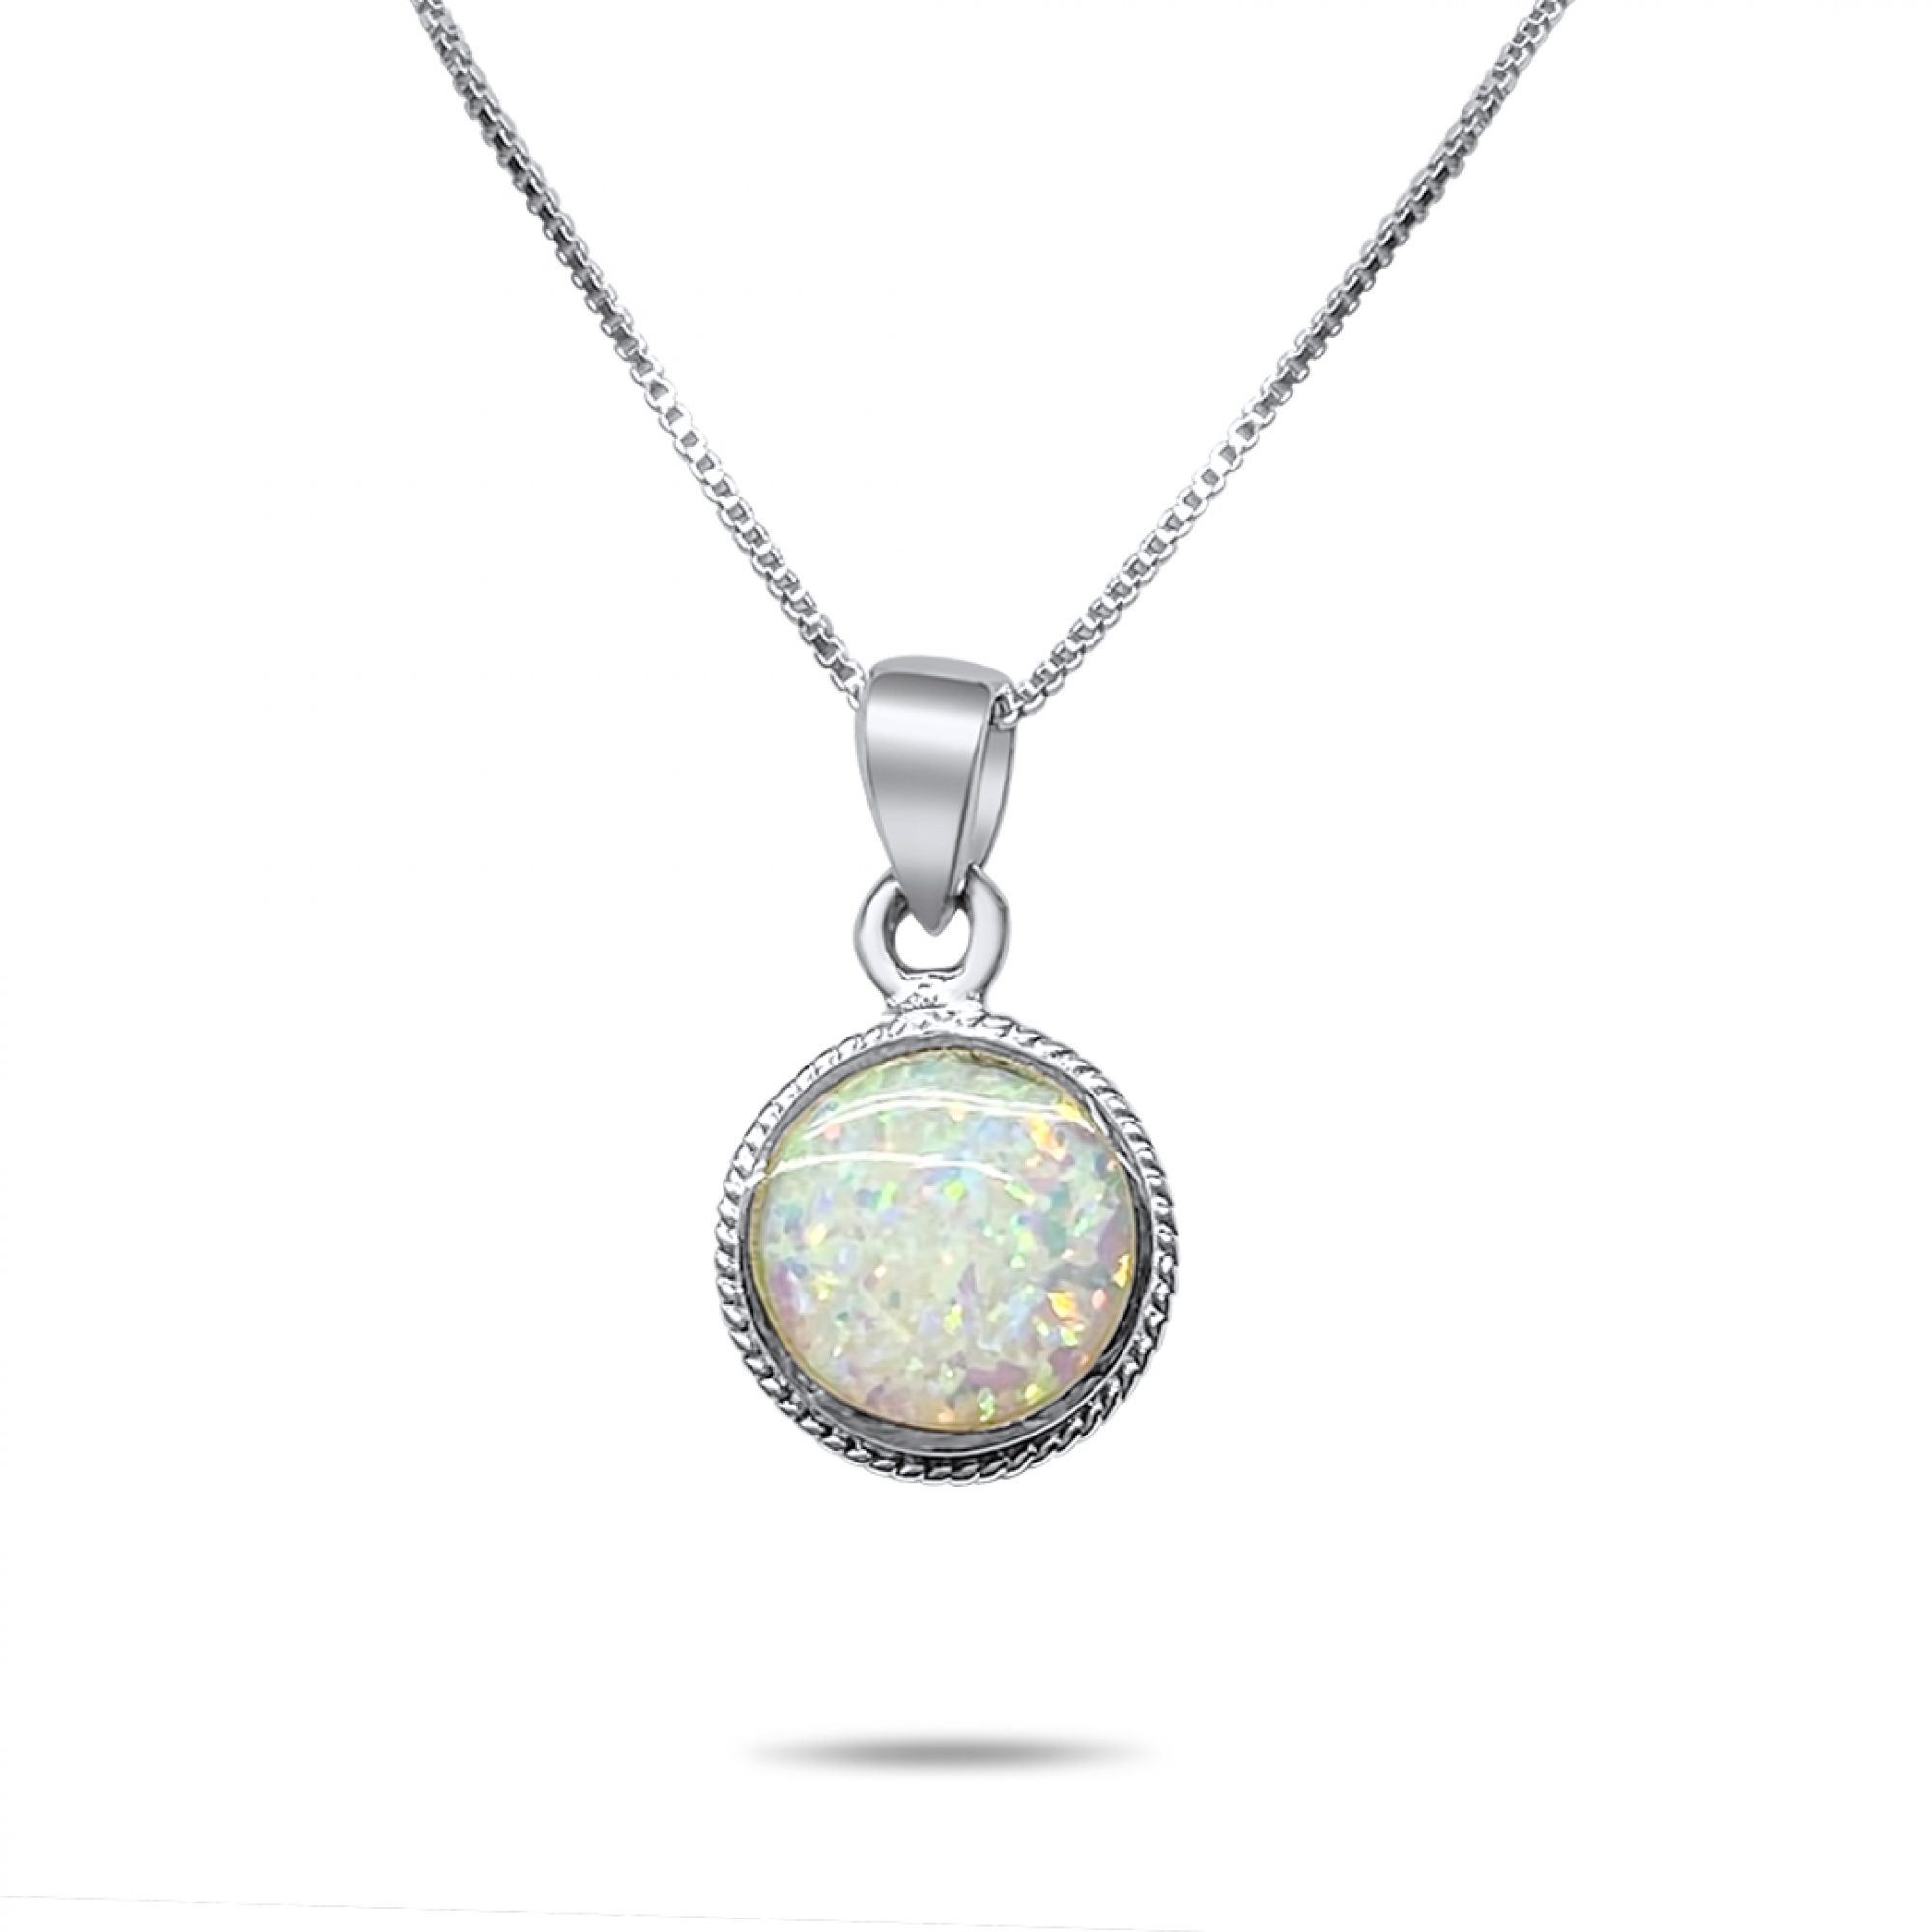 White opal pendant